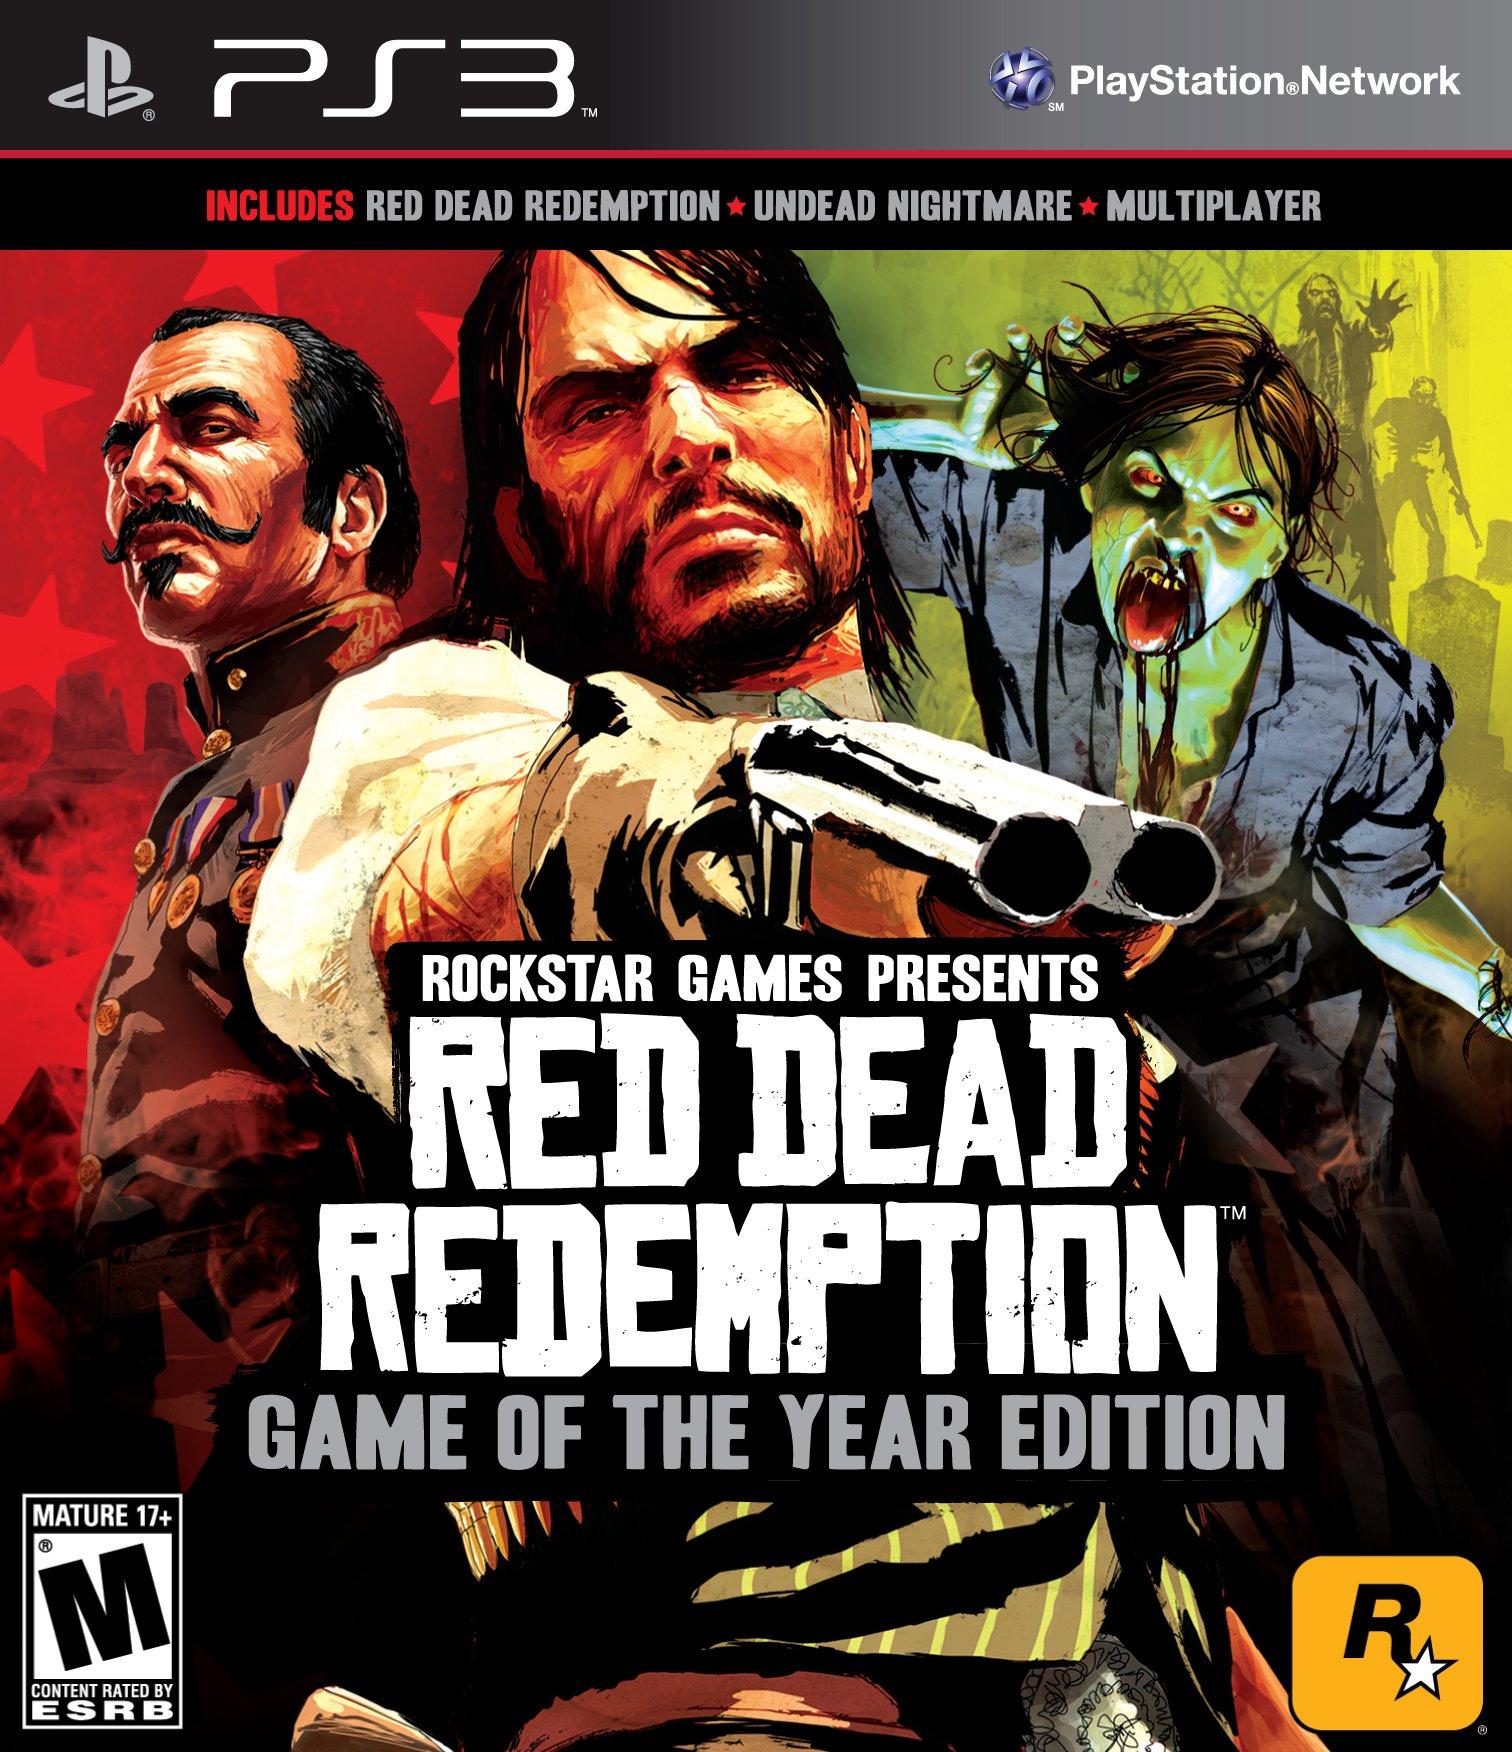 Spektakel Zin Spelen met Red Dead Redemption Game of the Year Edition - PlayStation 3 | PlayStation  3 | GameStop